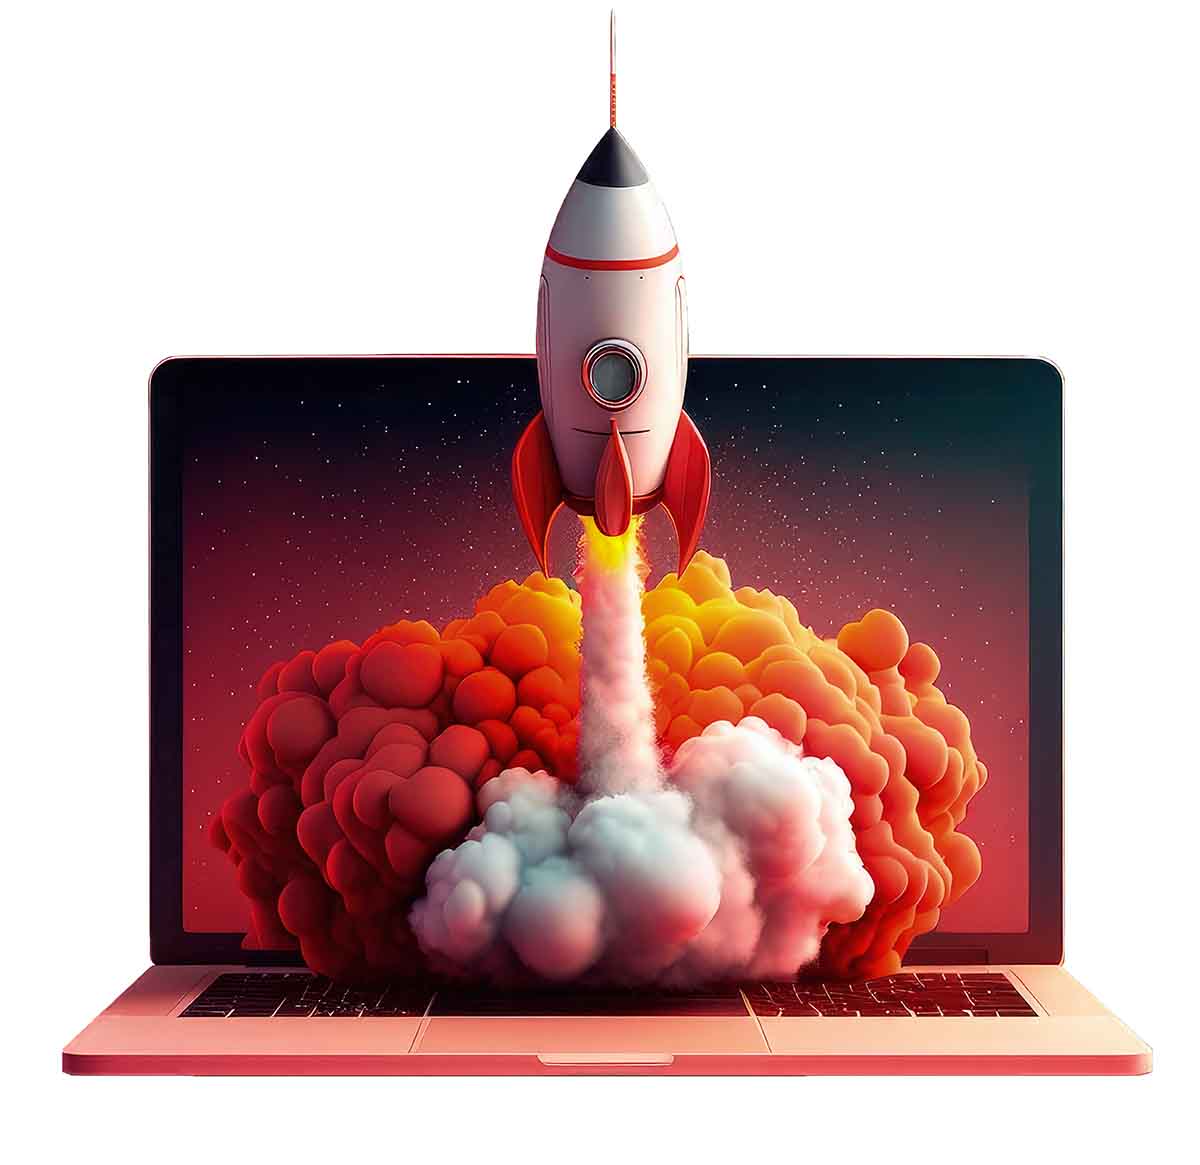 Rocket on laptop screen on PNG transparent background, startup c